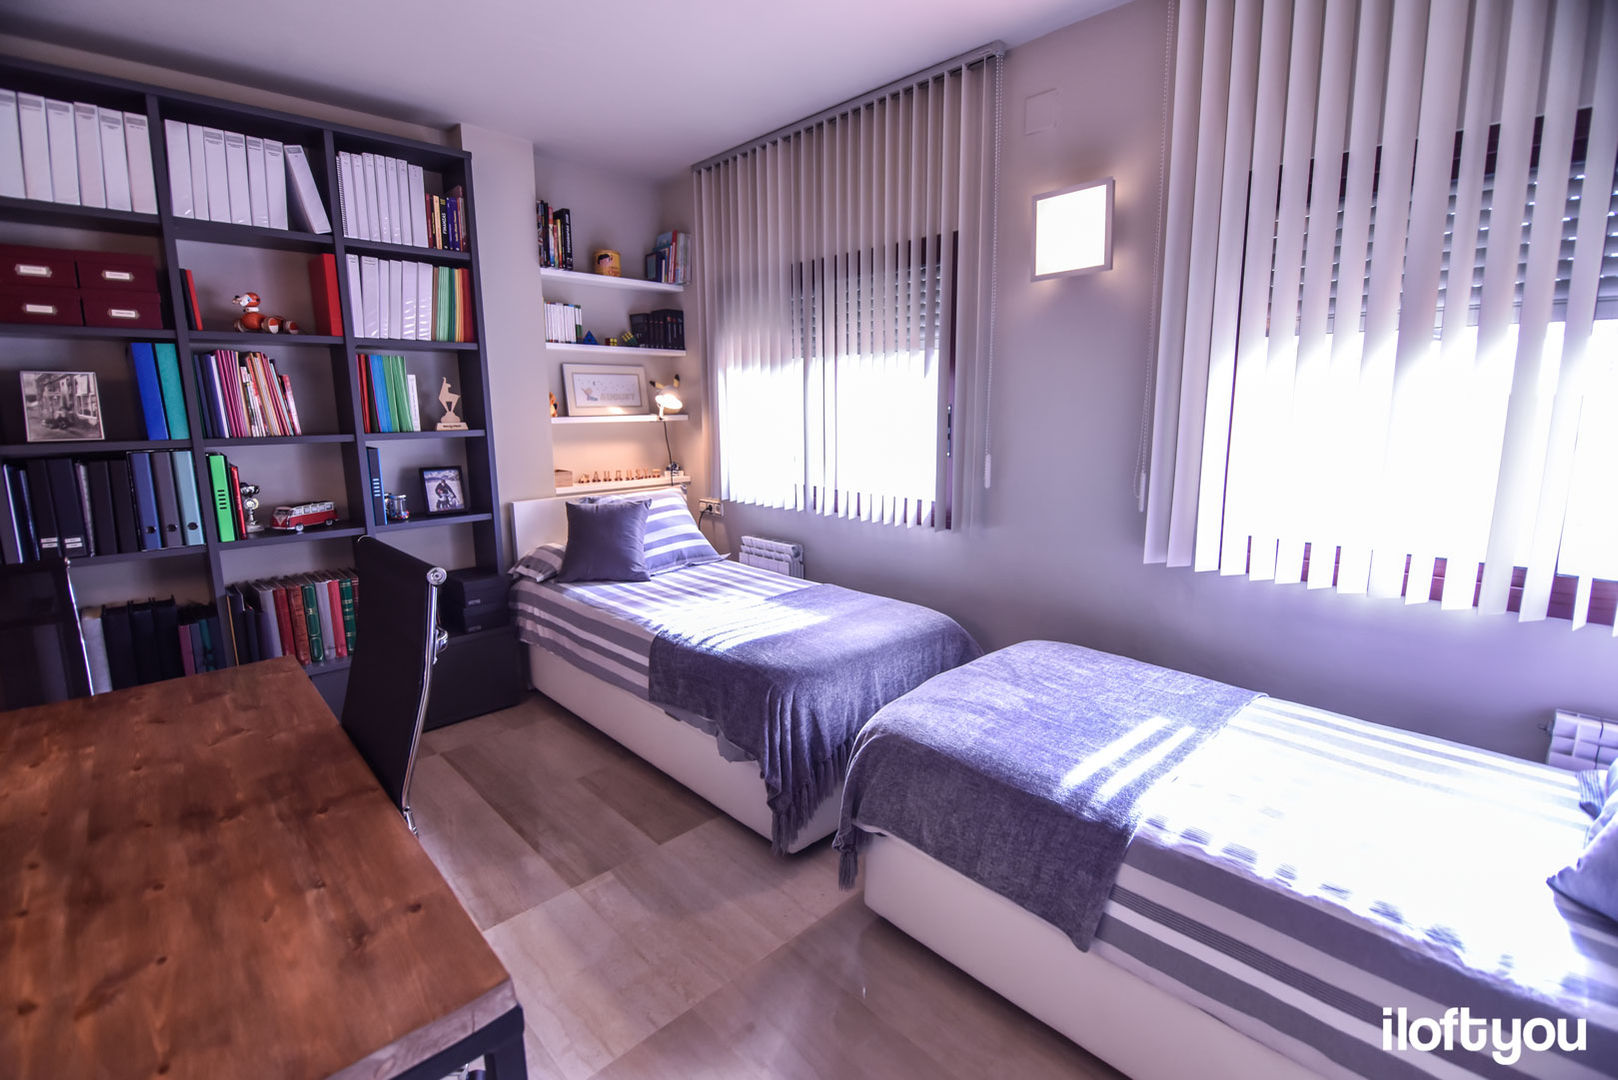 Dormitorio juvenil en Badalona, iloftyou iloftyou Phòng ngủ phong cách hiện đại